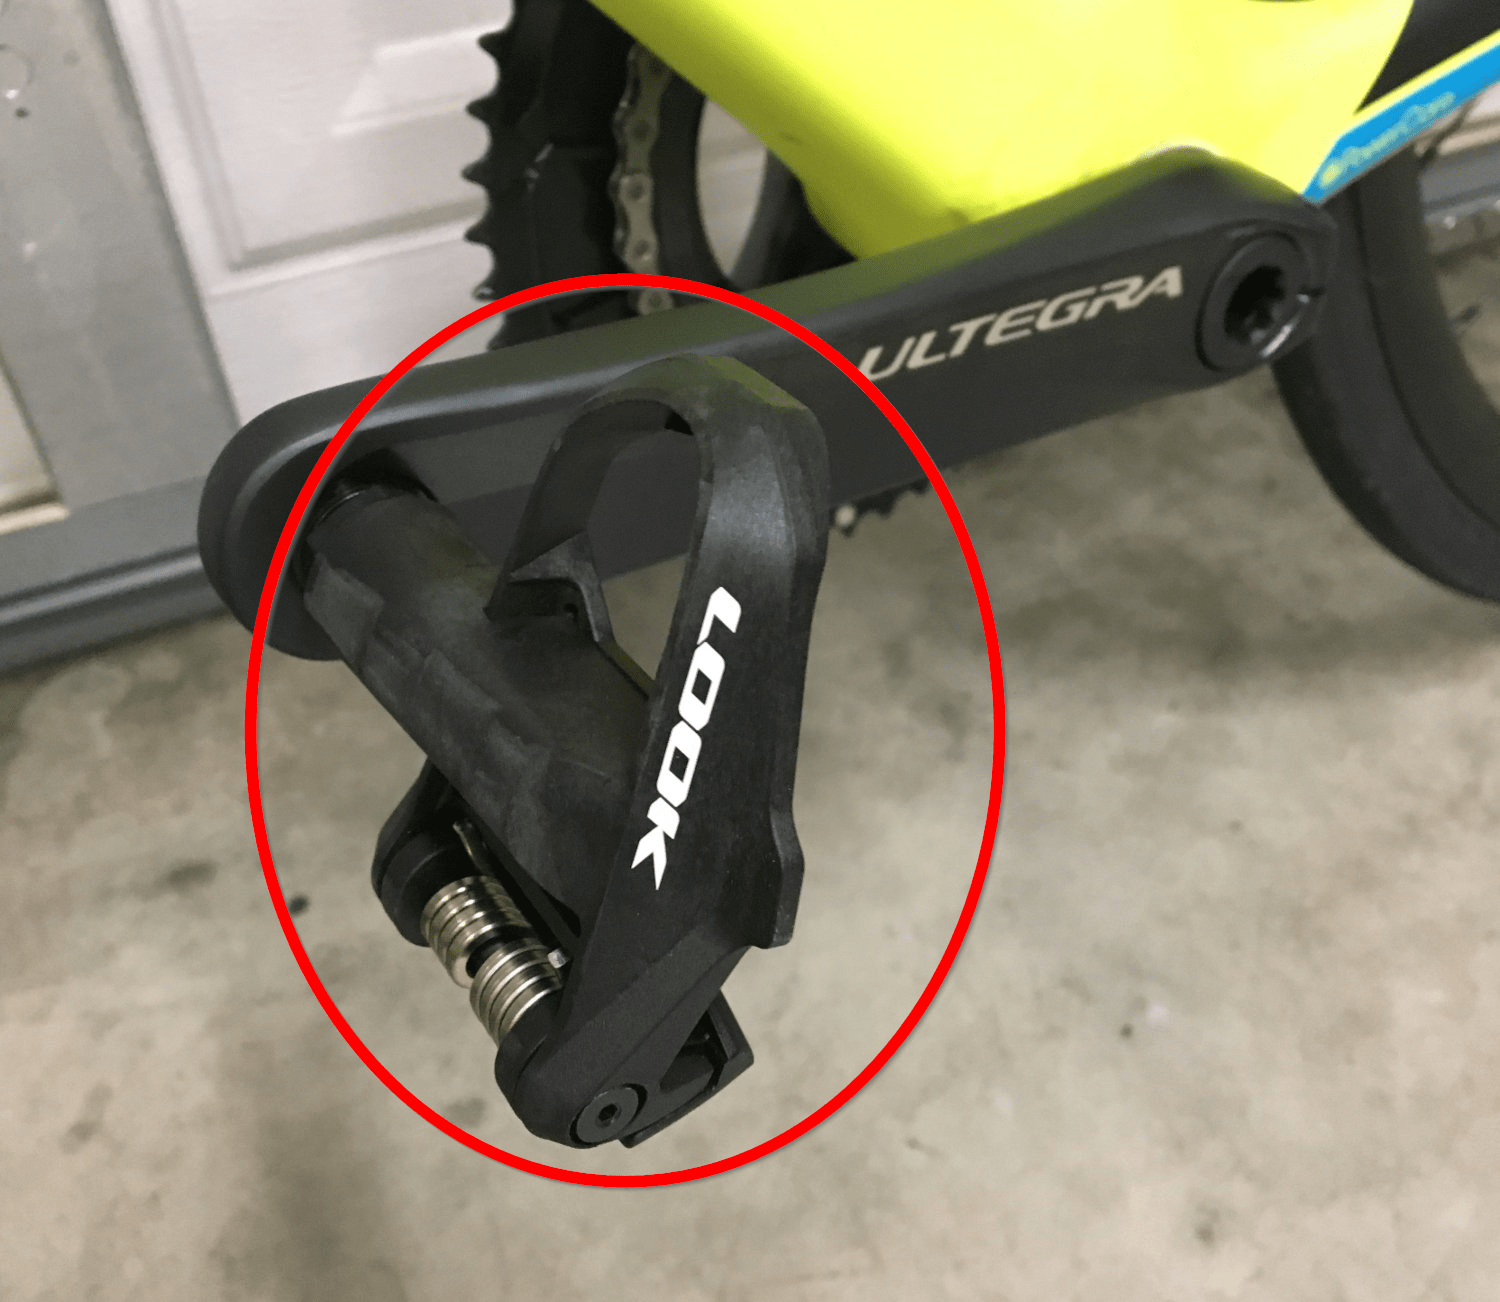 installing look keo pedals